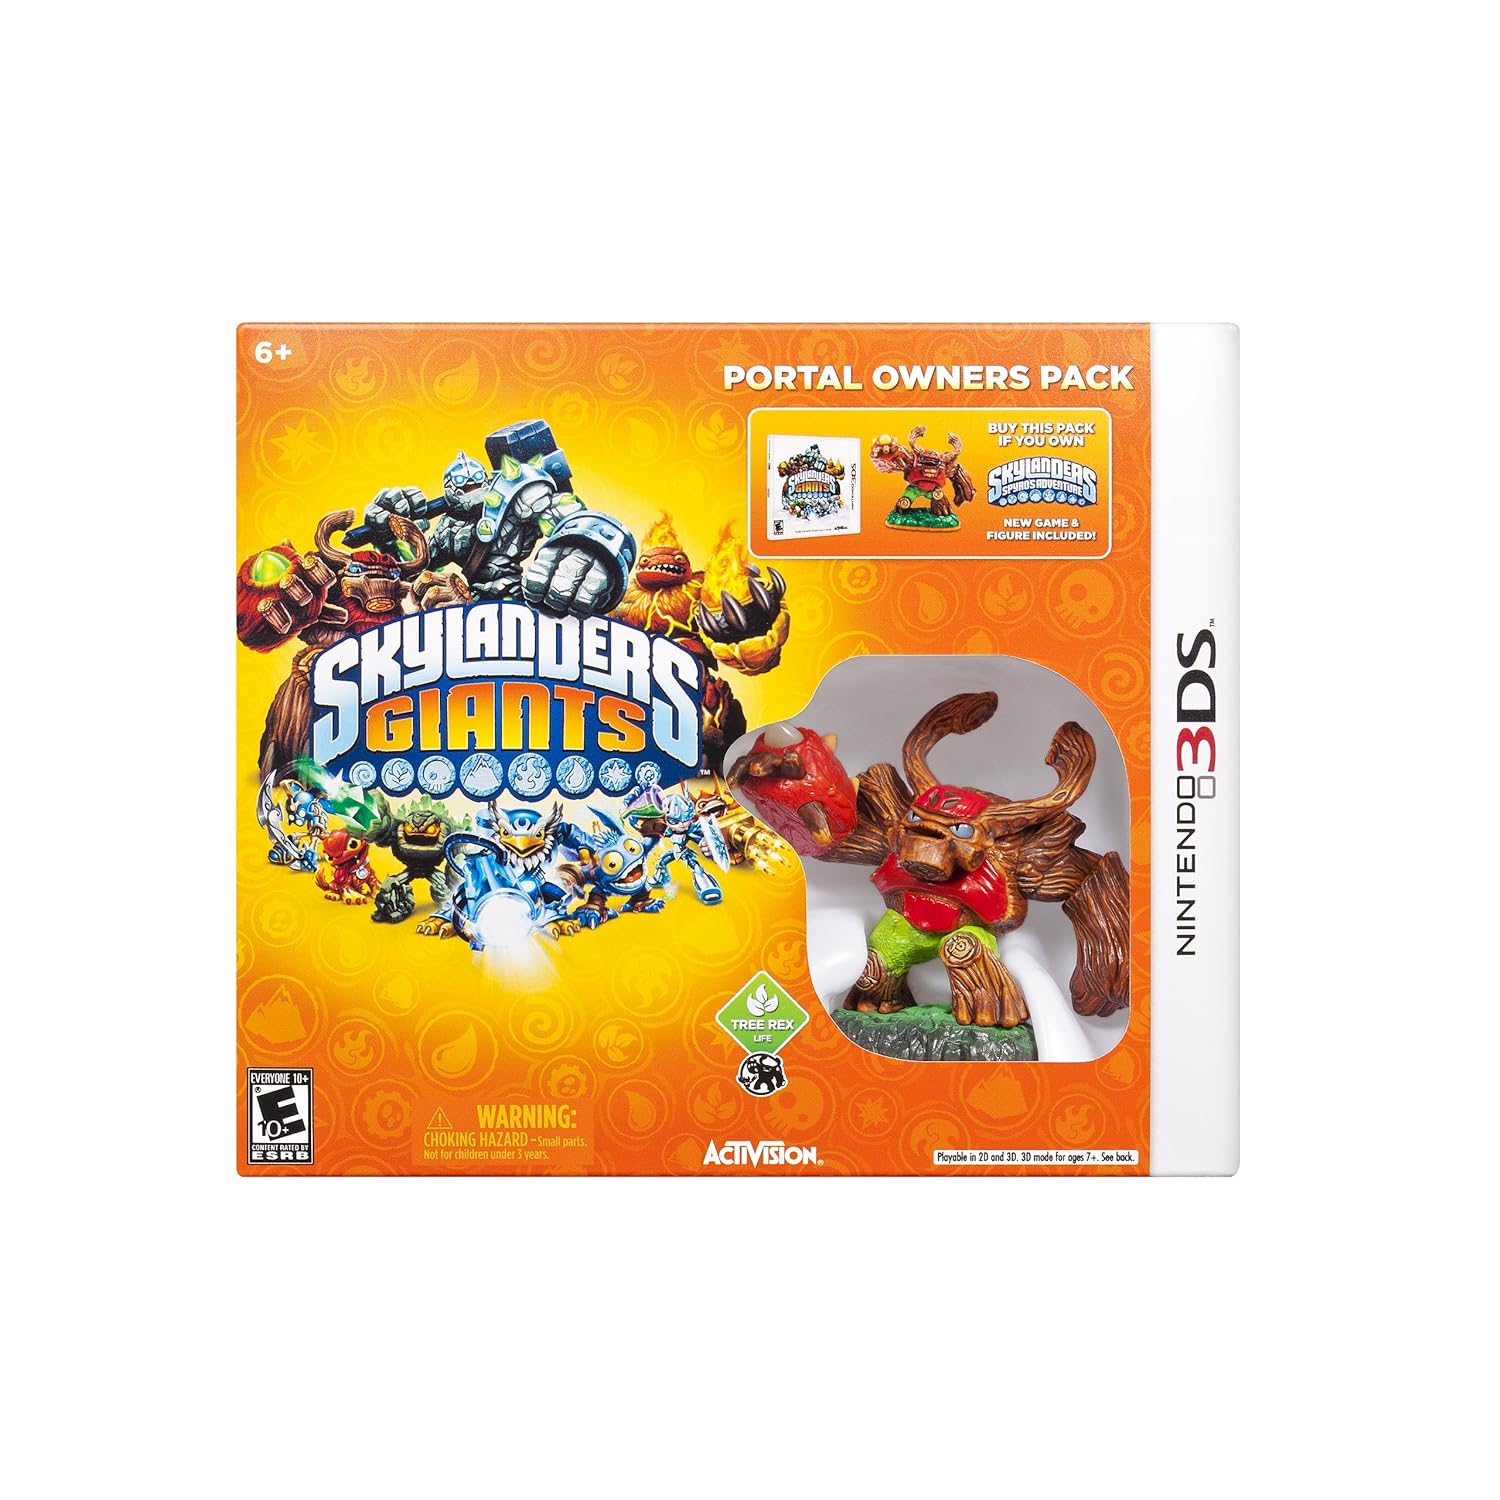 Activision Skylanders Giants Portal Owner Pack - Nintendo 3DS